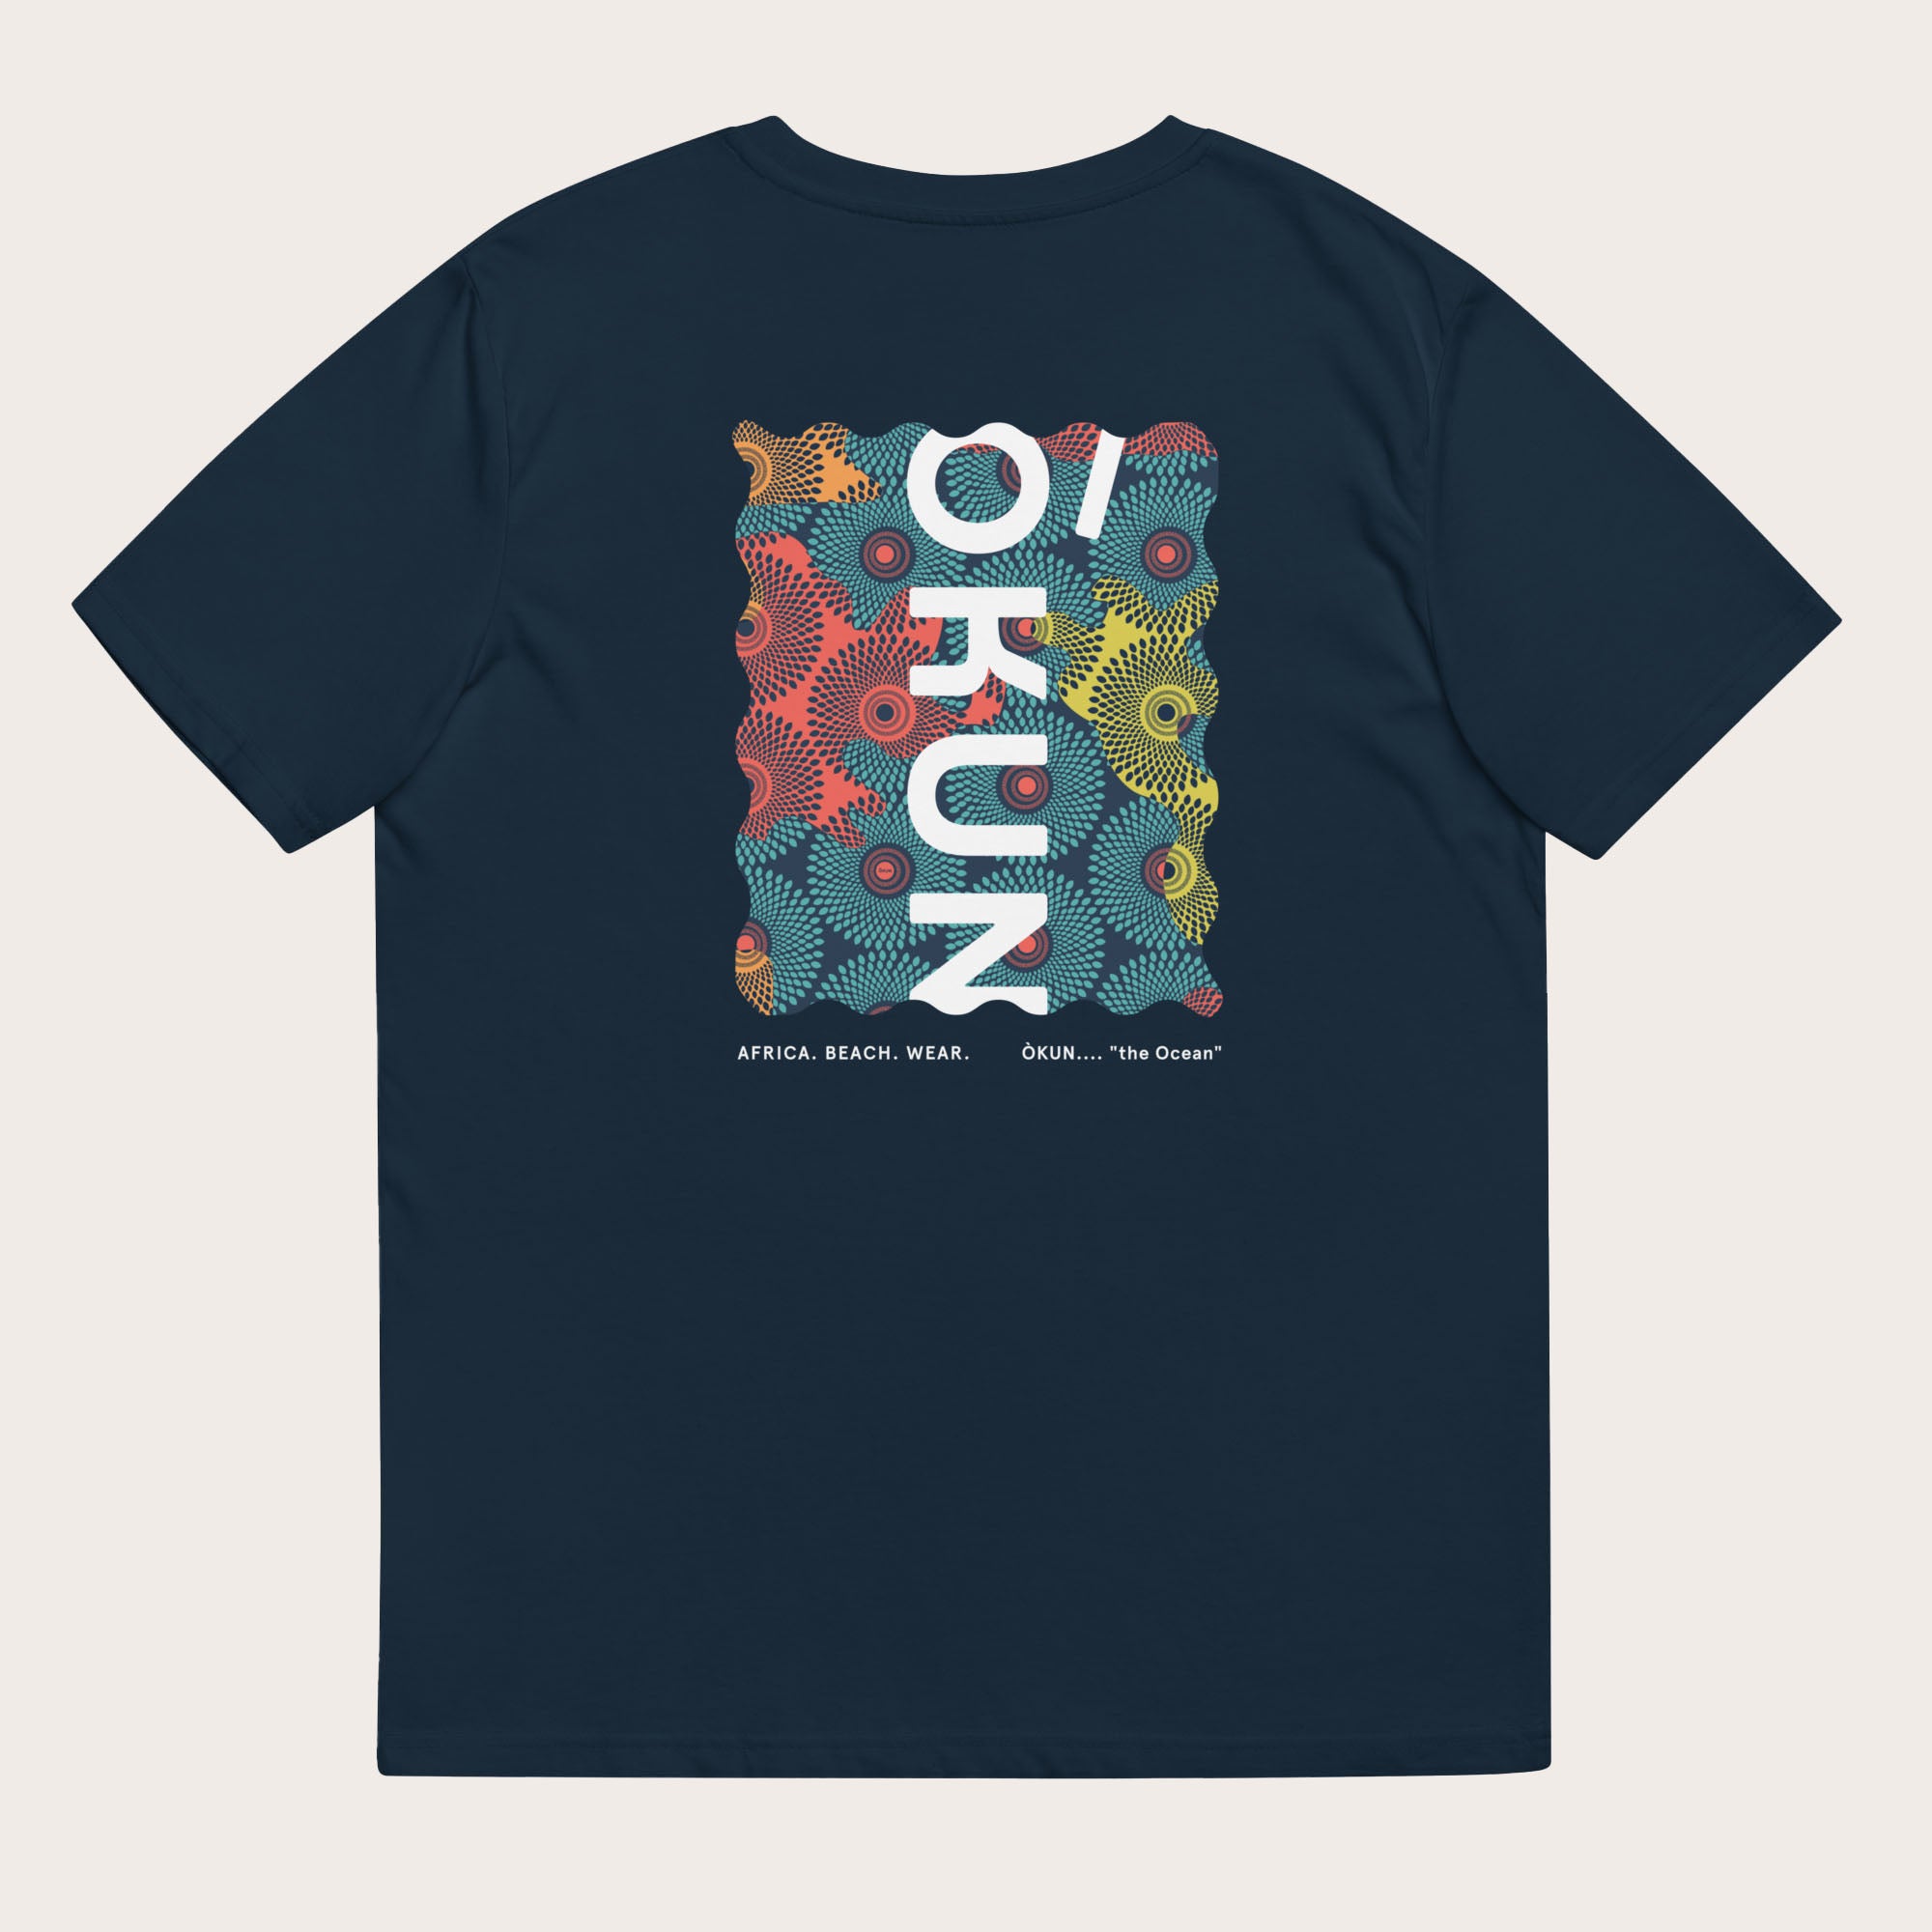 Designer Graphic T- Shirts in Navy